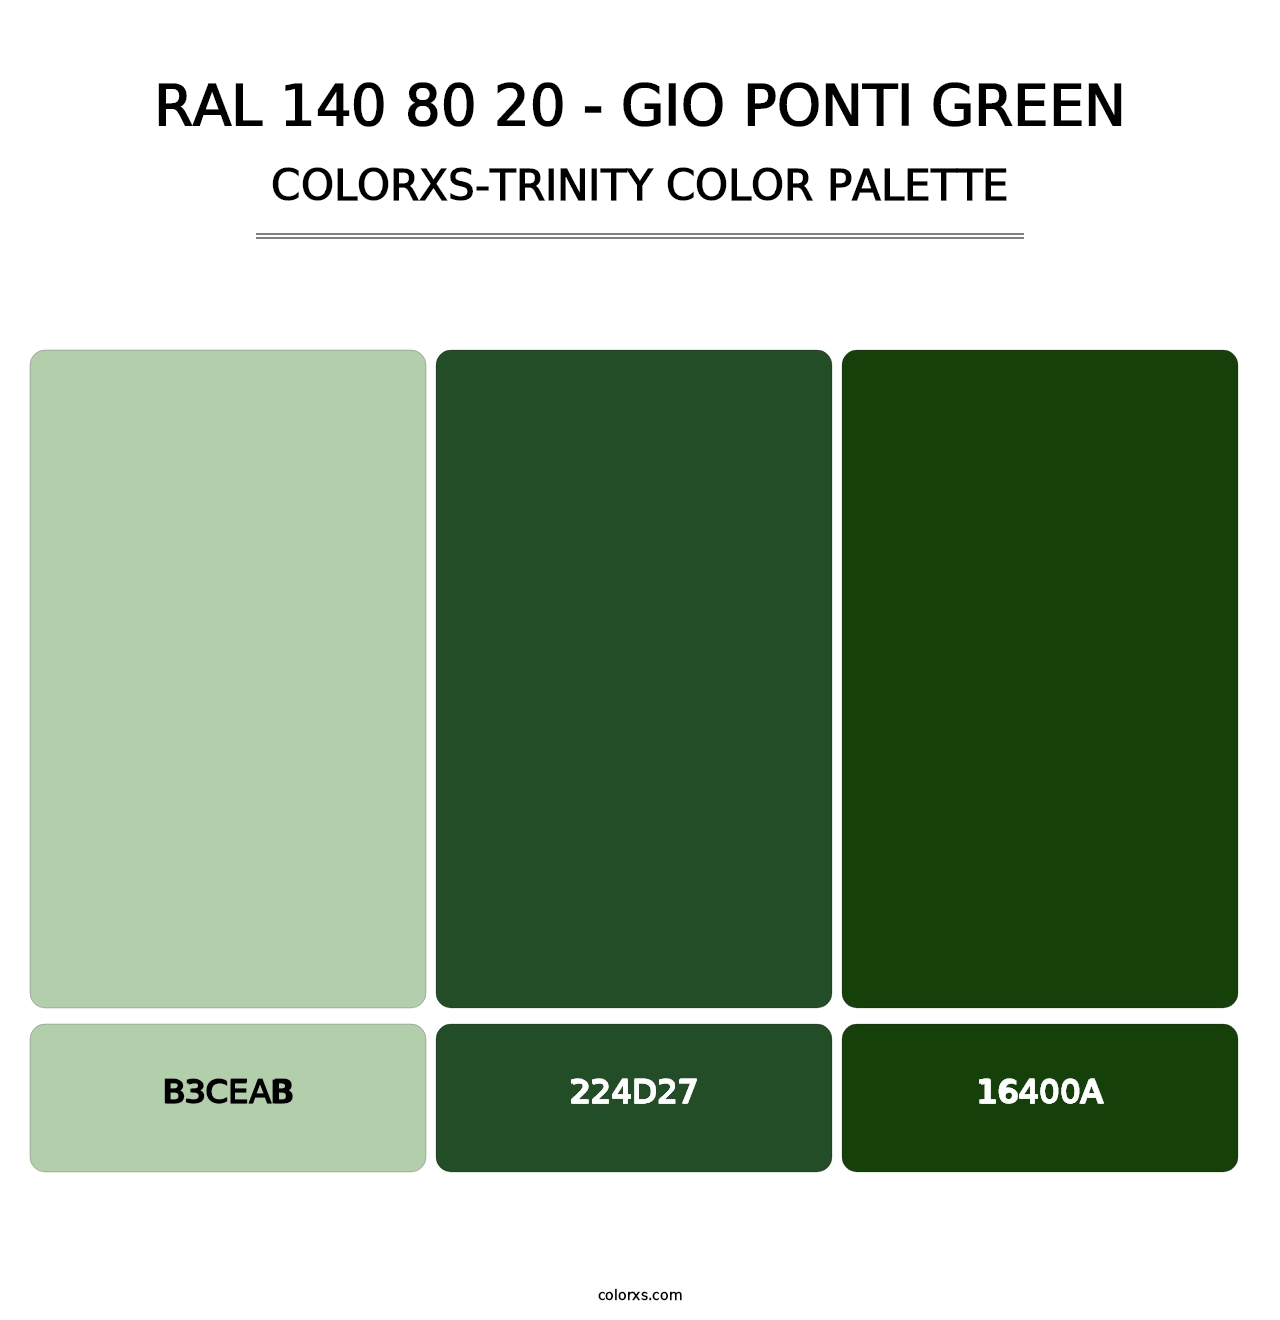 RAL 140 80 20 - Gio Ponti Green - Colorxs Trinity Palette